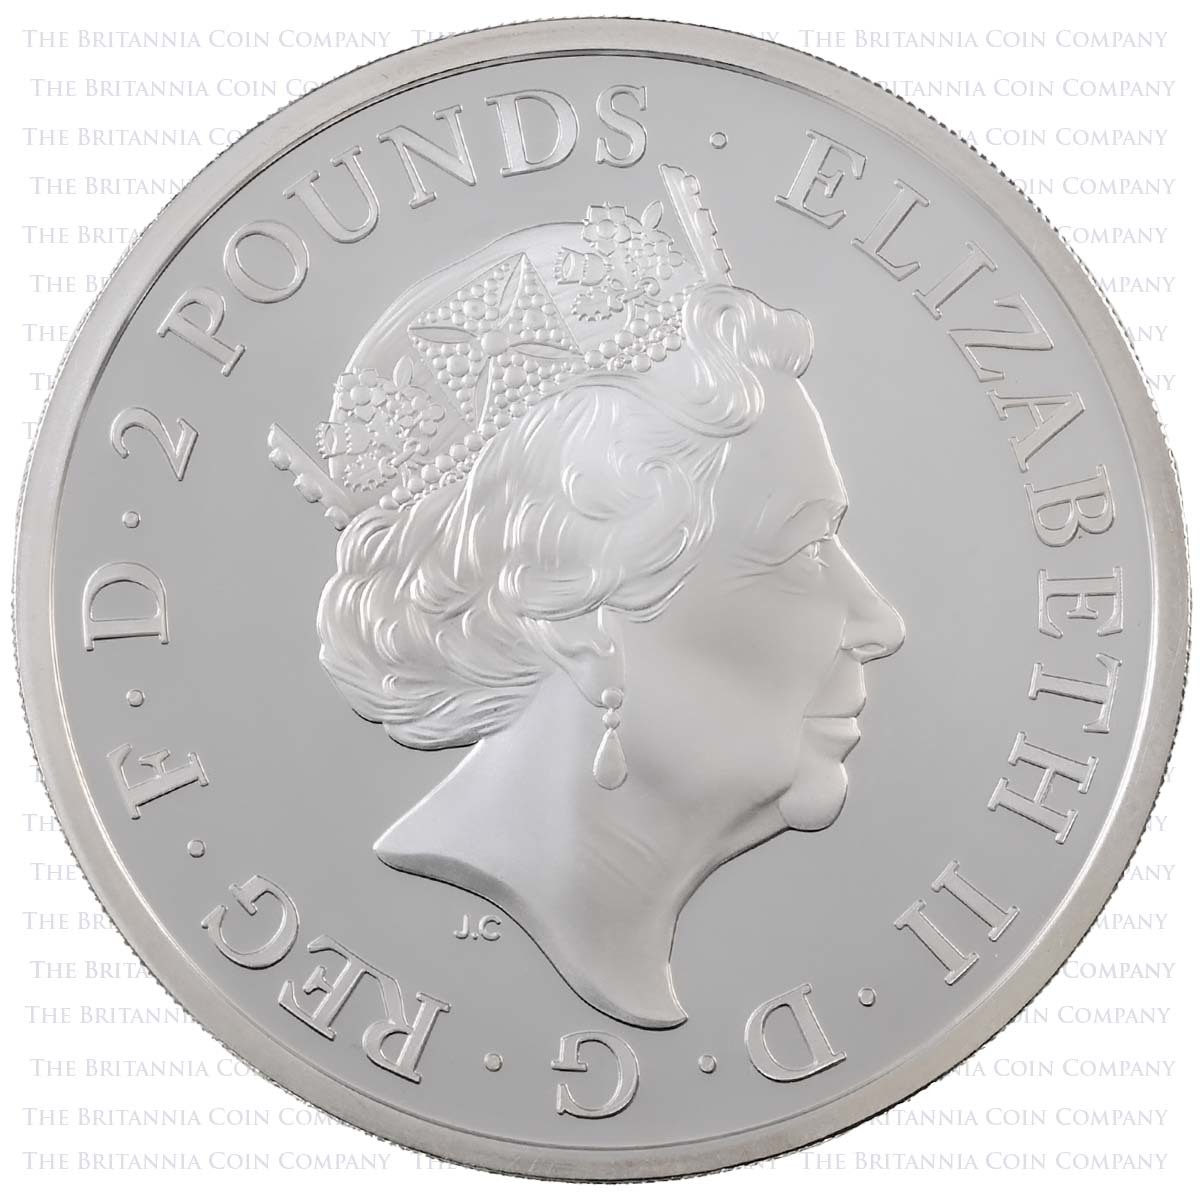 BR17SO 2017 Britannia 20th Anniversary One Ounce Silver Proof Coin Obverse